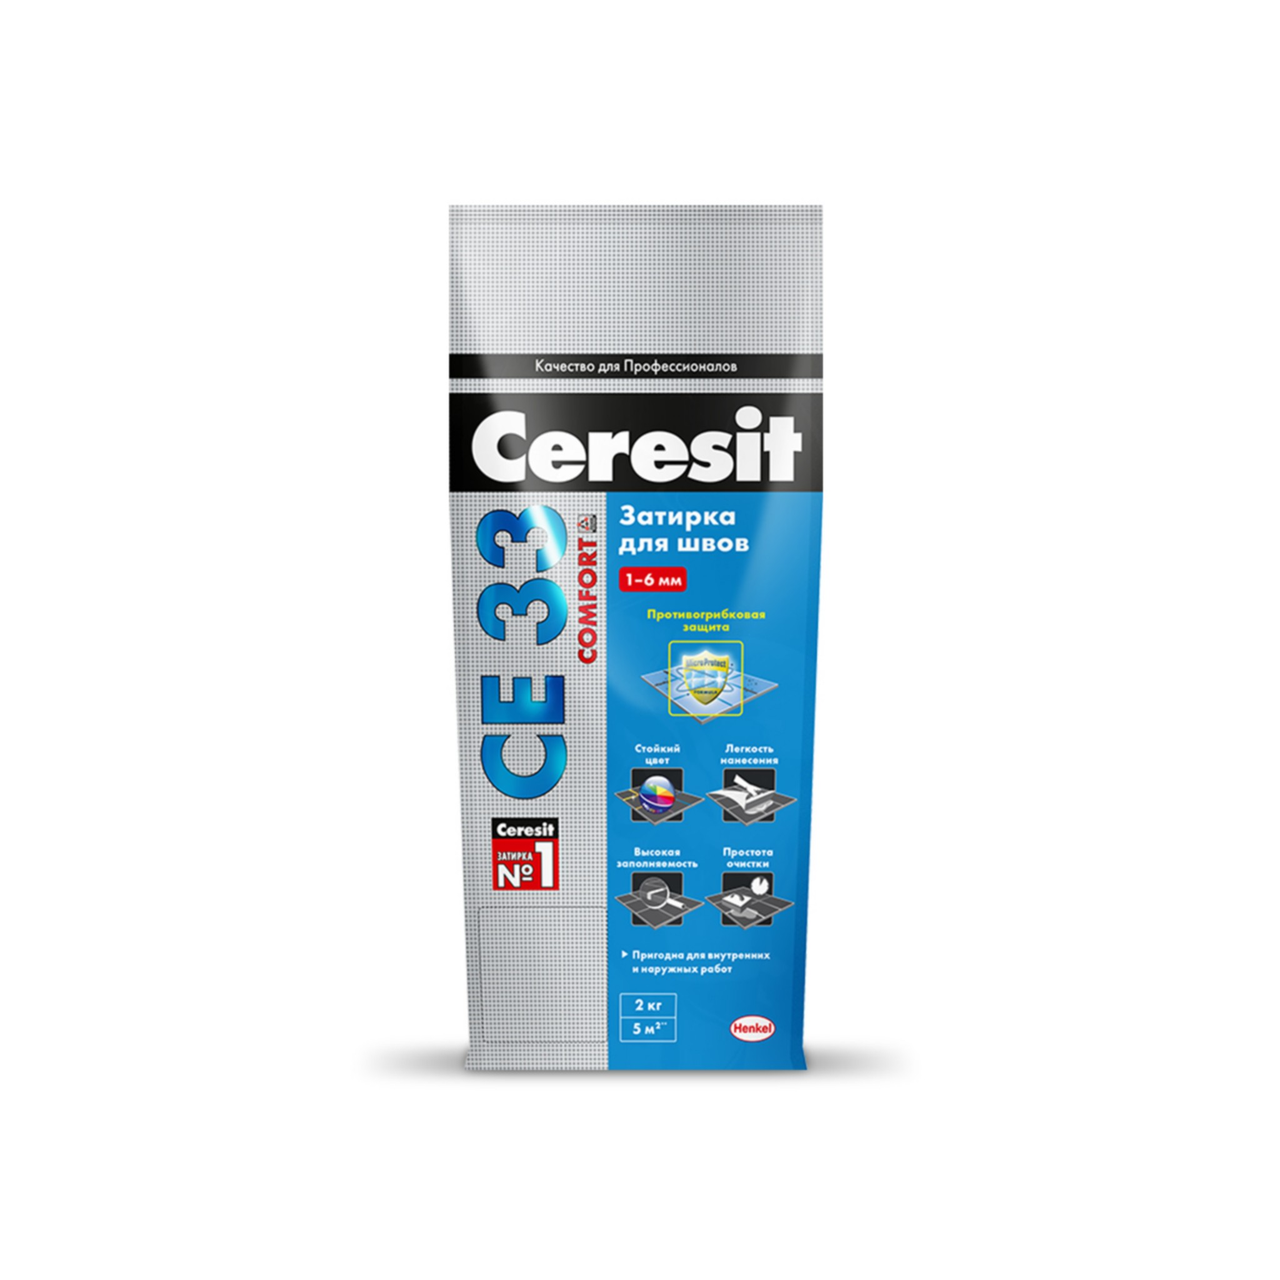 Ceresit  CE 33 Comfort затирка для узких швов, цвет: Багама (Bahama), 5 кг